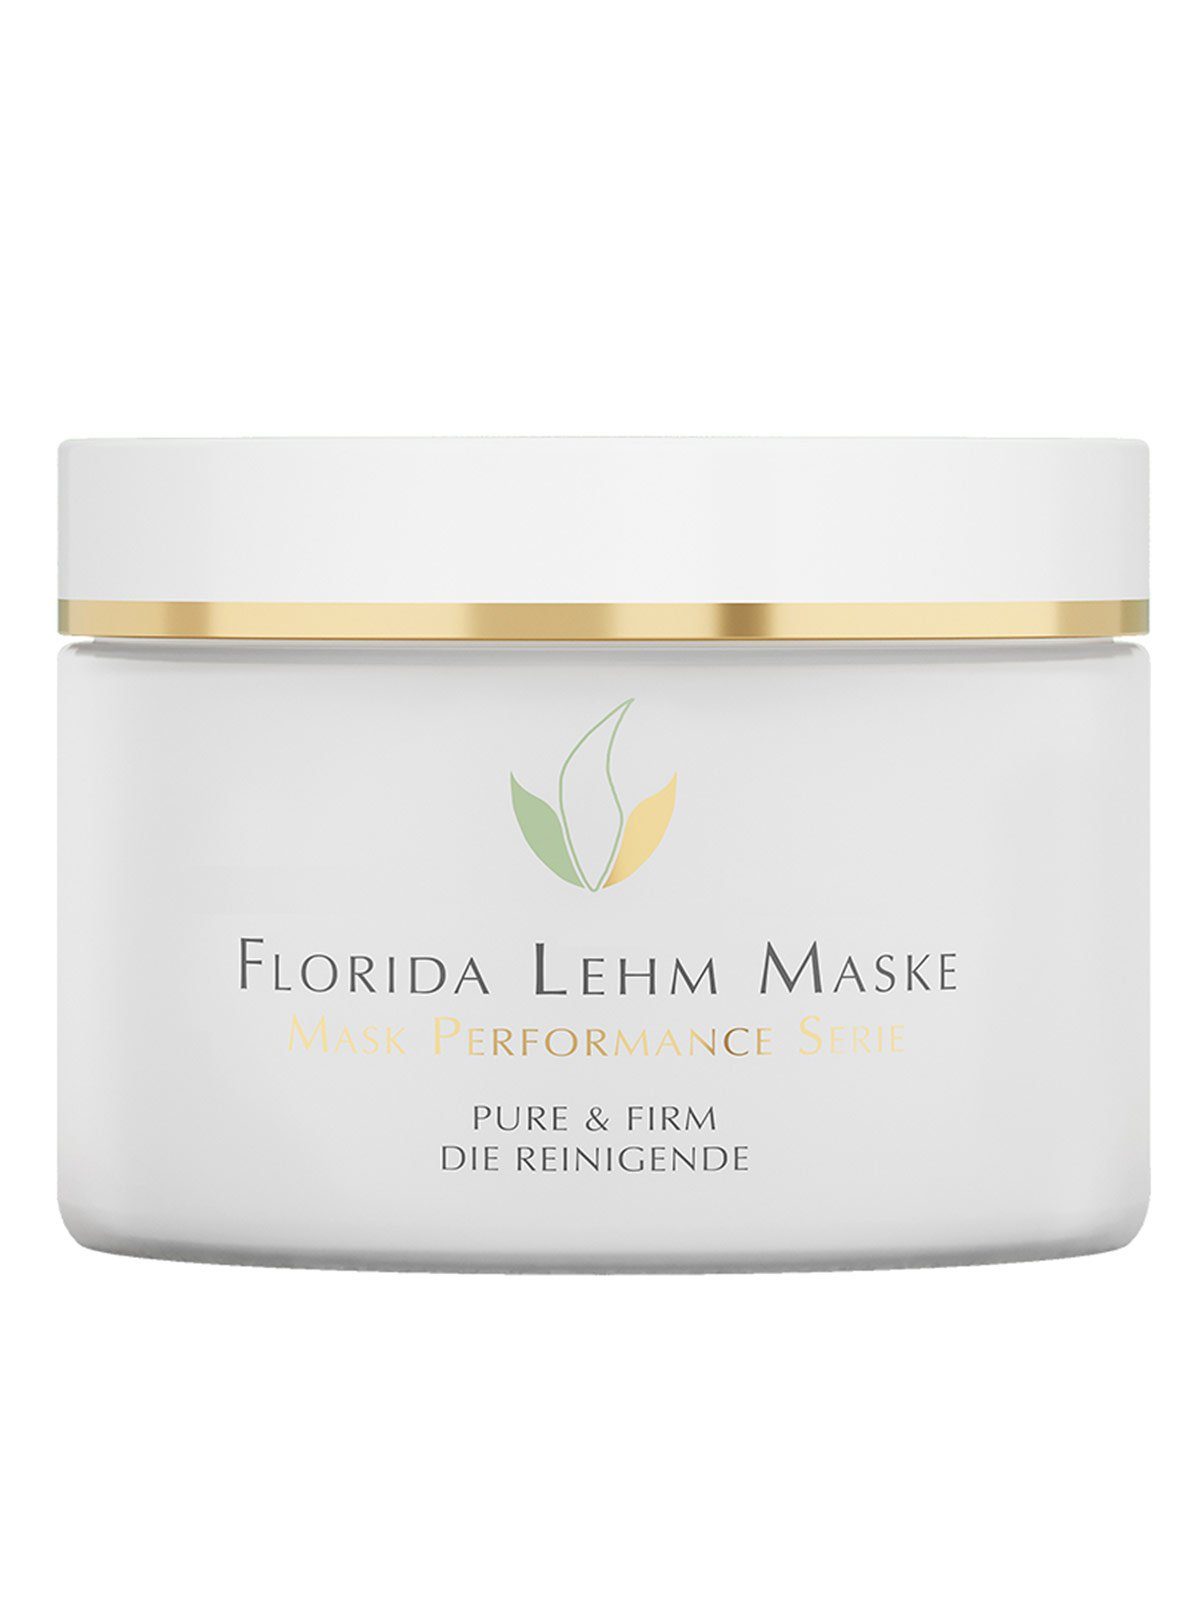 Aloe Vera Cosmetic Tratz Gesichtsmaske Florida Lehm Maske Mask Performance Serie, 1-tlg.